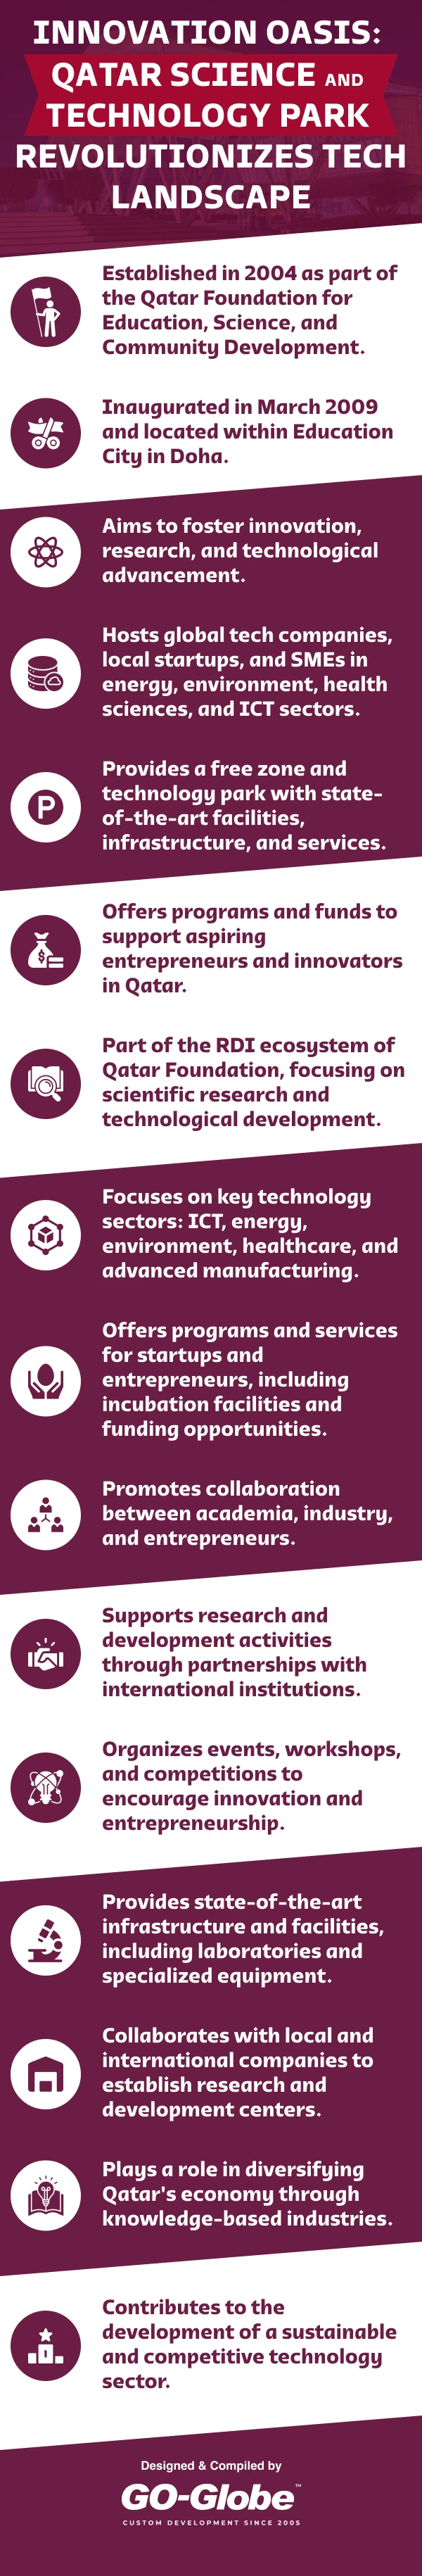 qatar_science_tech_park